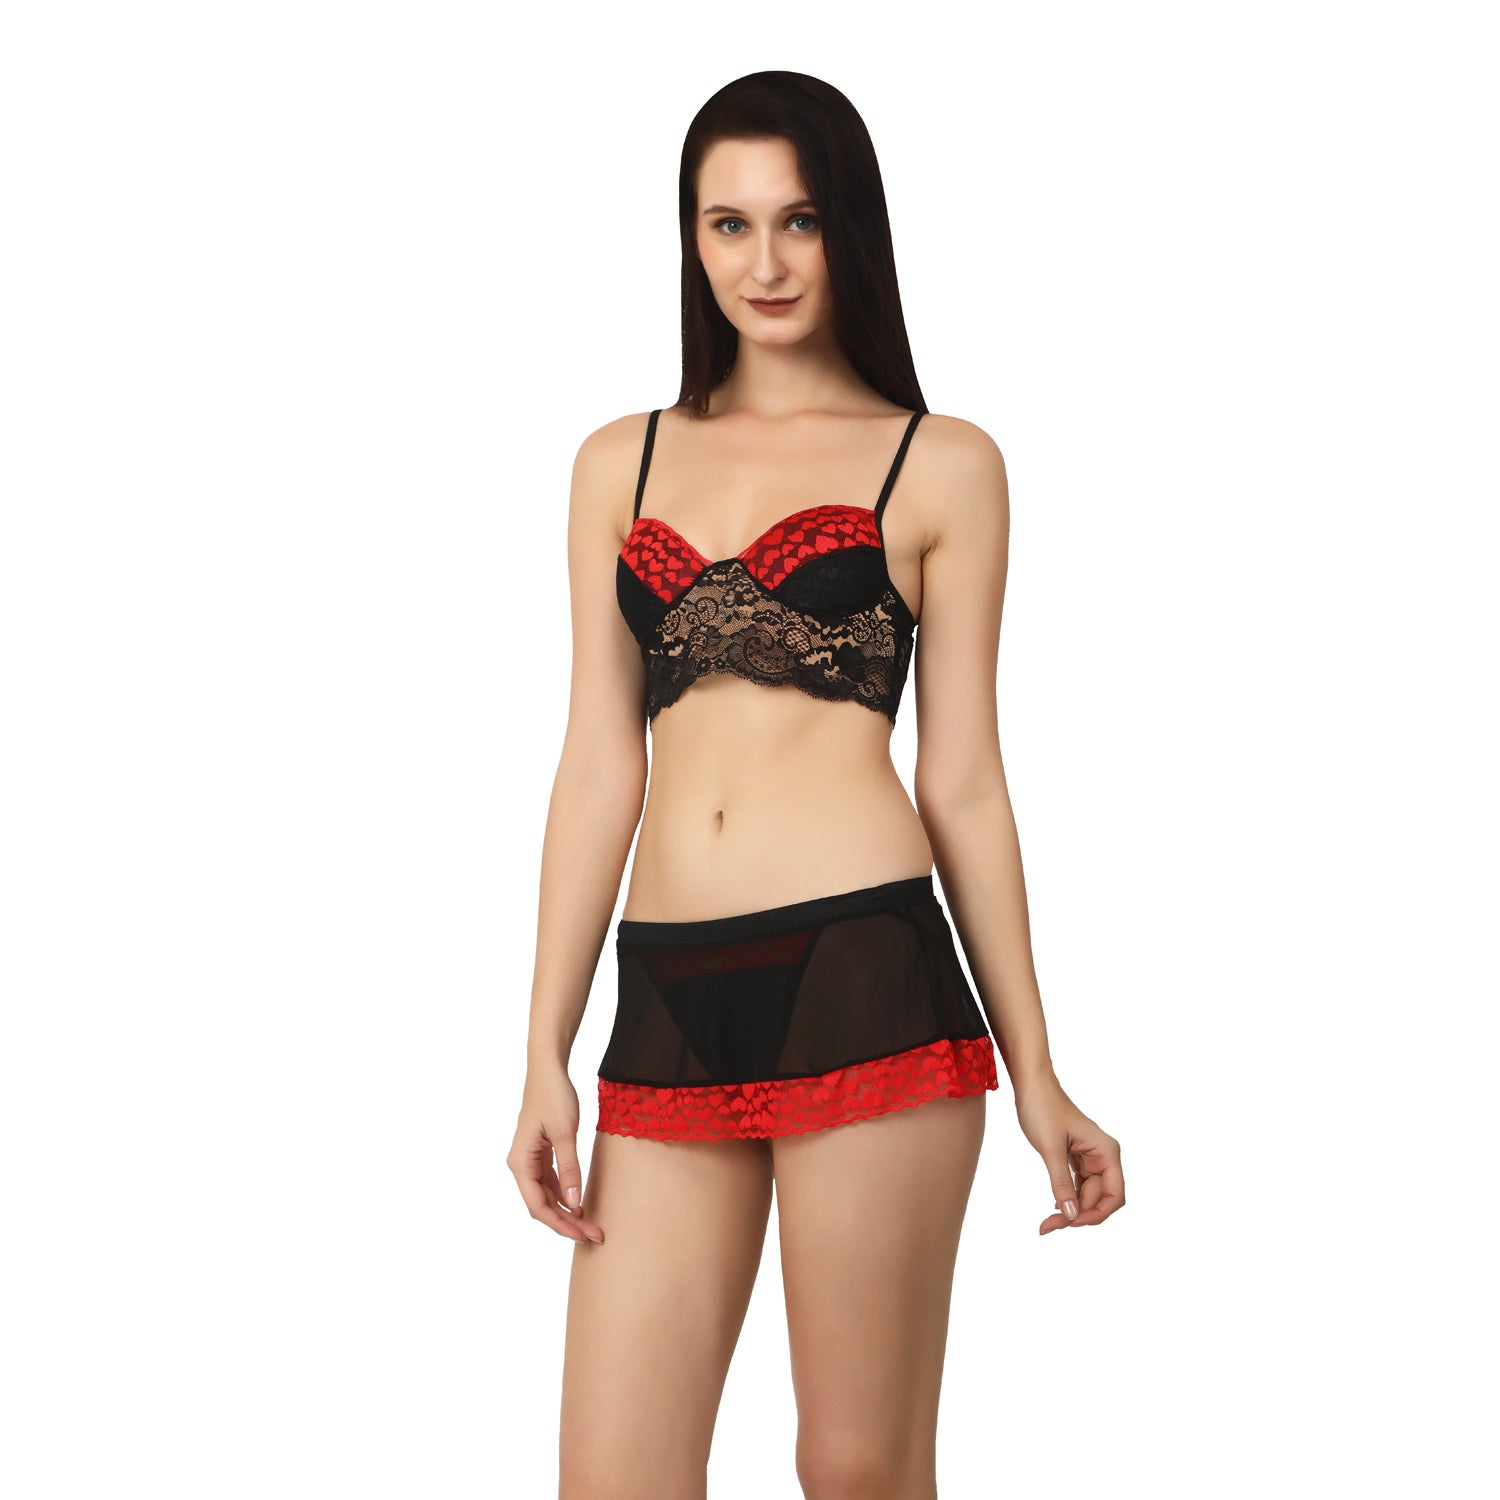 Elecurve Lingerie Set 3 Pieces |Bra, Mini Skirt with G-String |Lingerie Set for Women |Black & Red